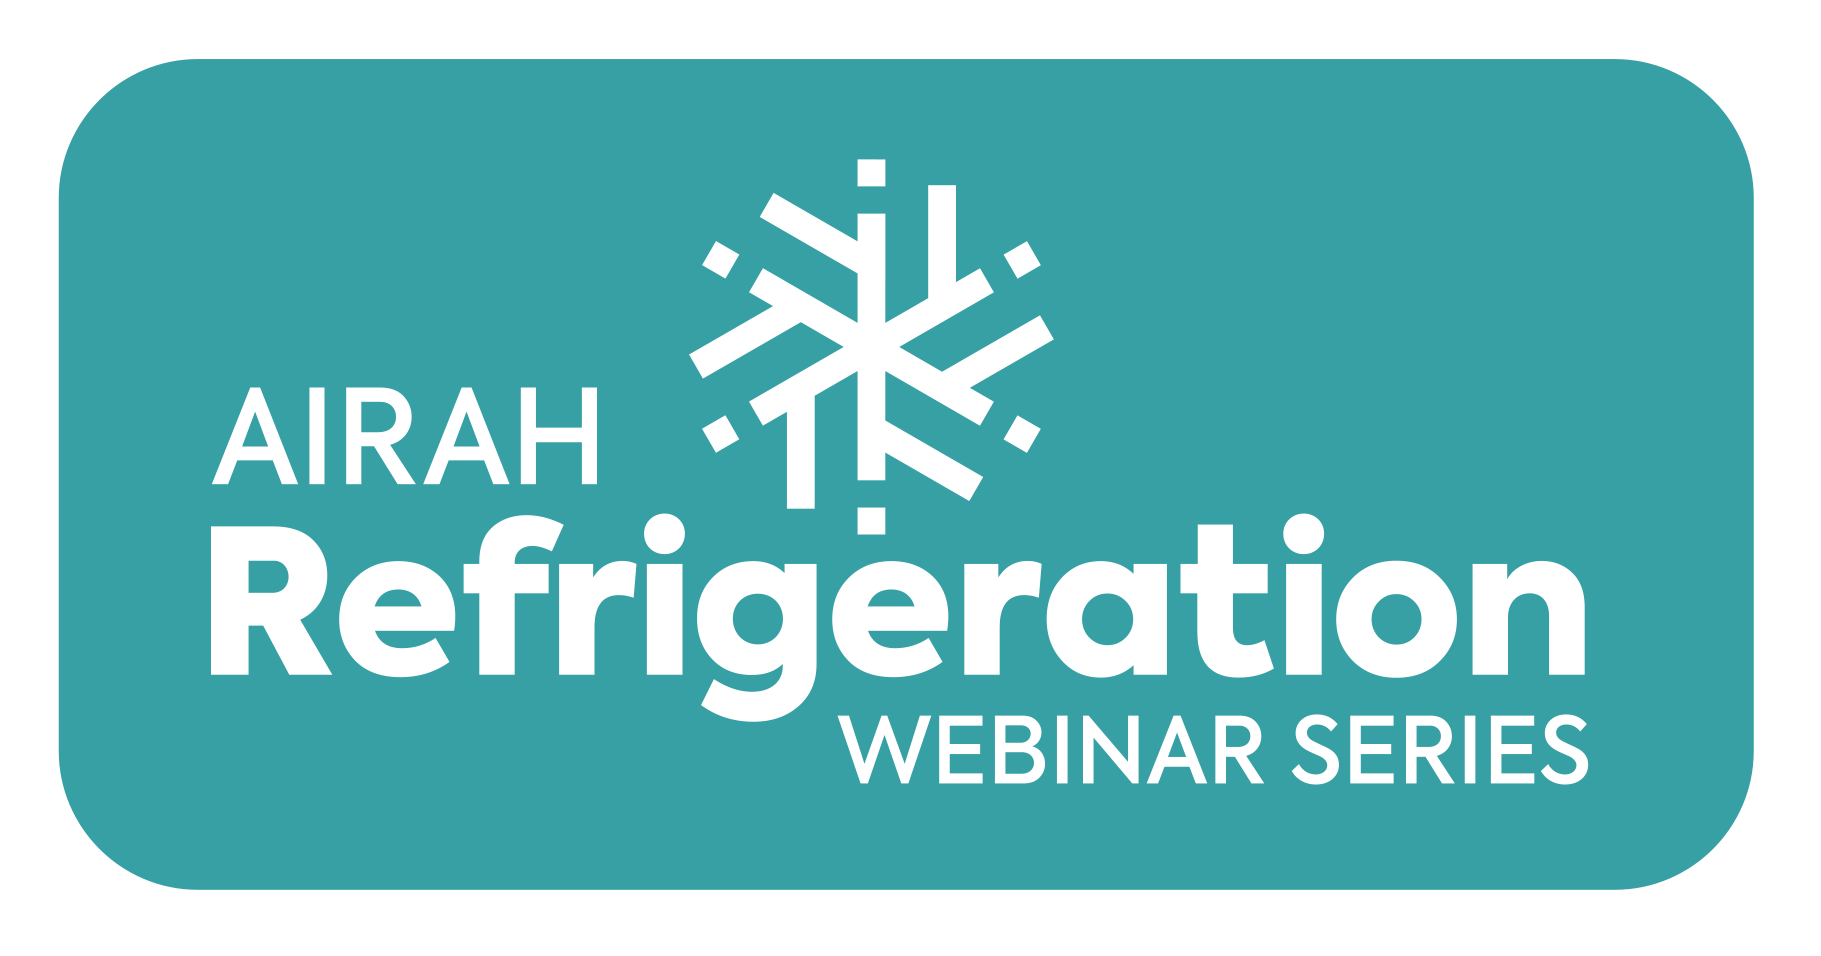 AIRAH's refrigeration webinar series